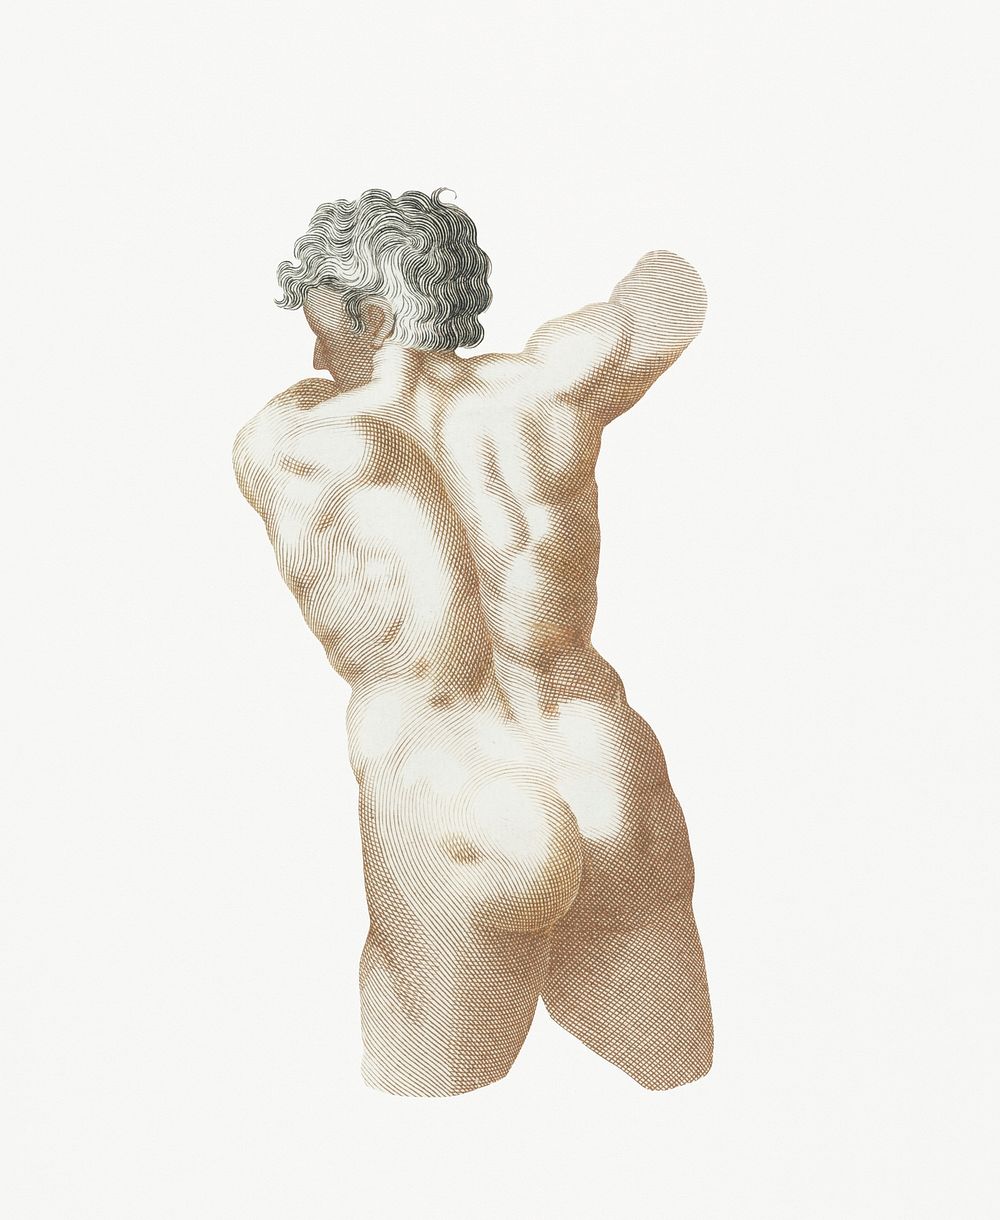 Naked man (1688-1698) by Johan Teyler (1648-1709). Original from Rijks Museum. Digitally enhanced by rawpixel.